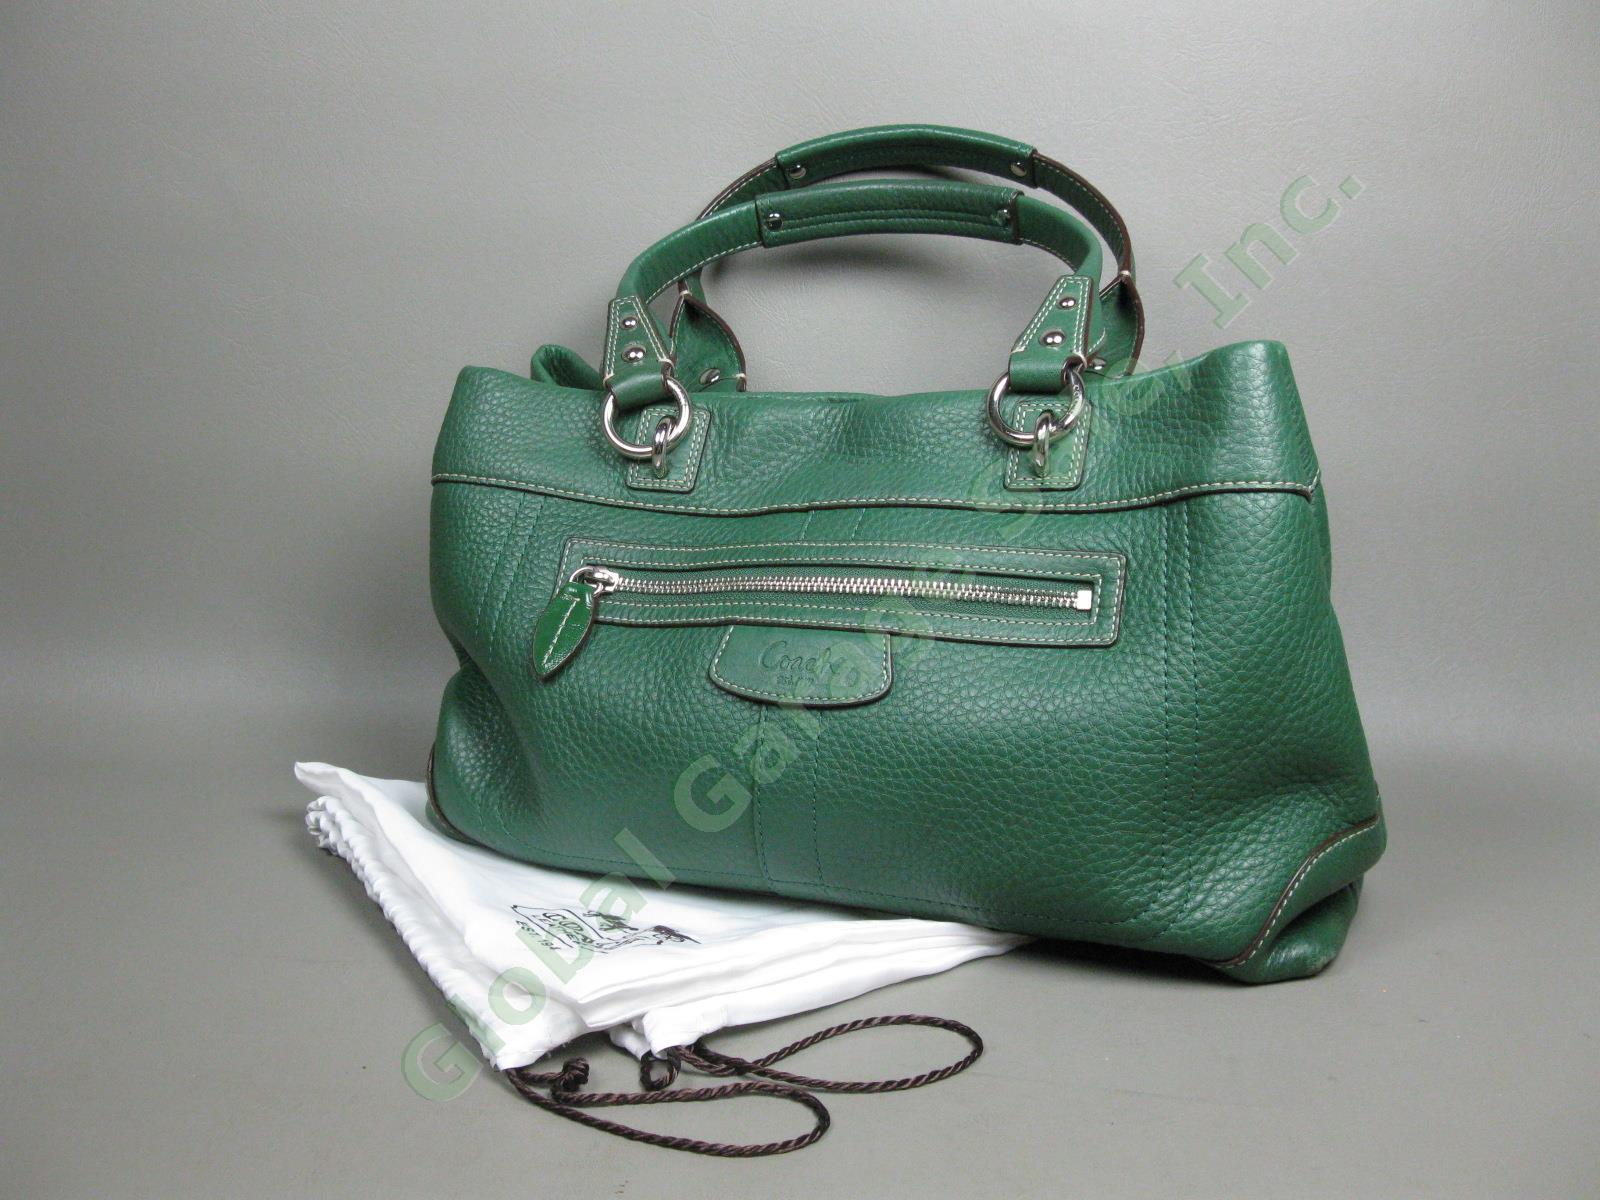 BRAND NEW Coach Designer Dark Green Pebble Leather Handbag Satchel Tote Bag NR